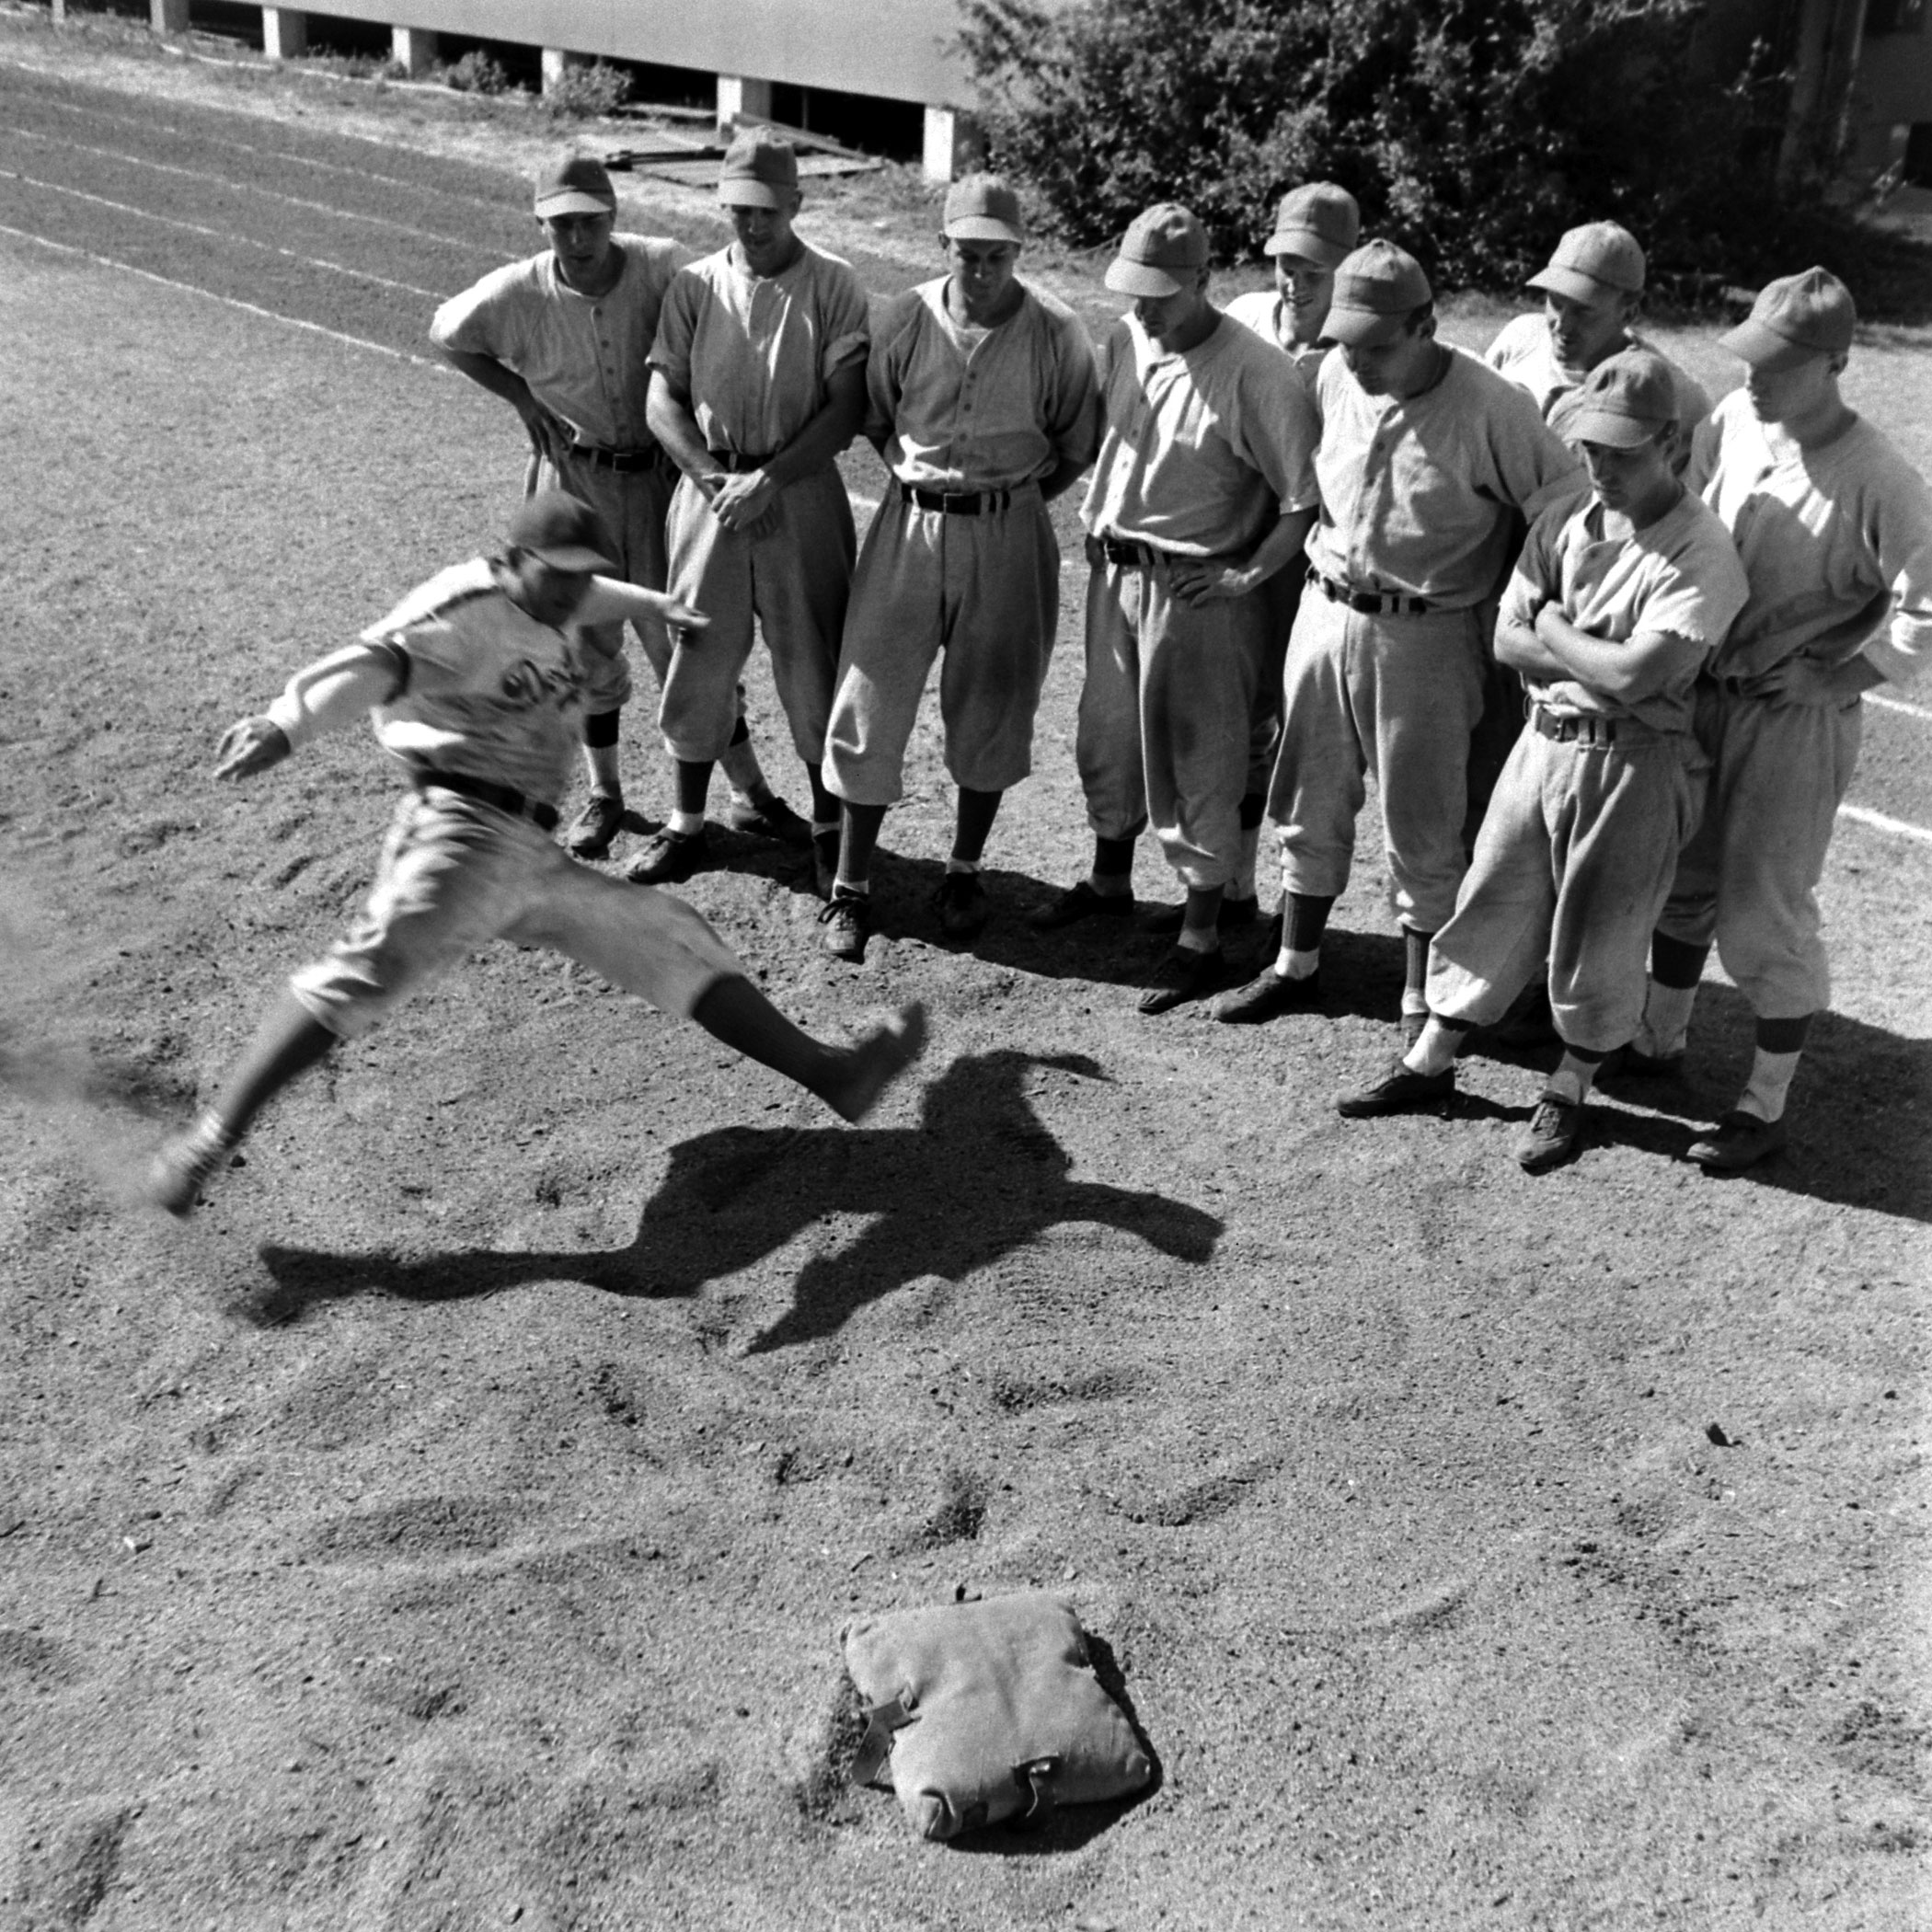 Brooklyn rookies and prospects practice hook slides, Vero Beach, Fla., 1948.